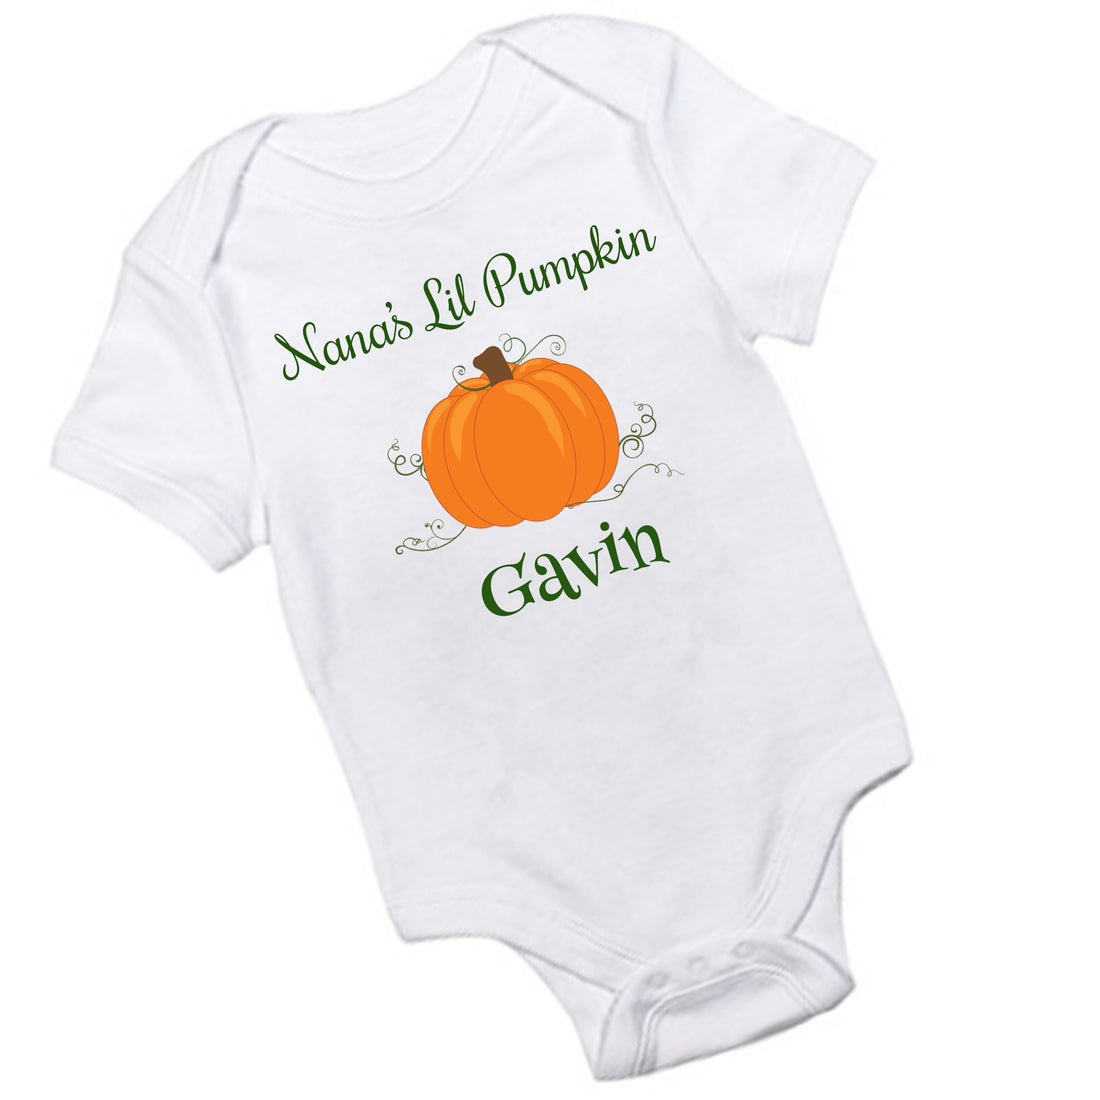 personalized littel pumpkin onesie for baby's first halloween